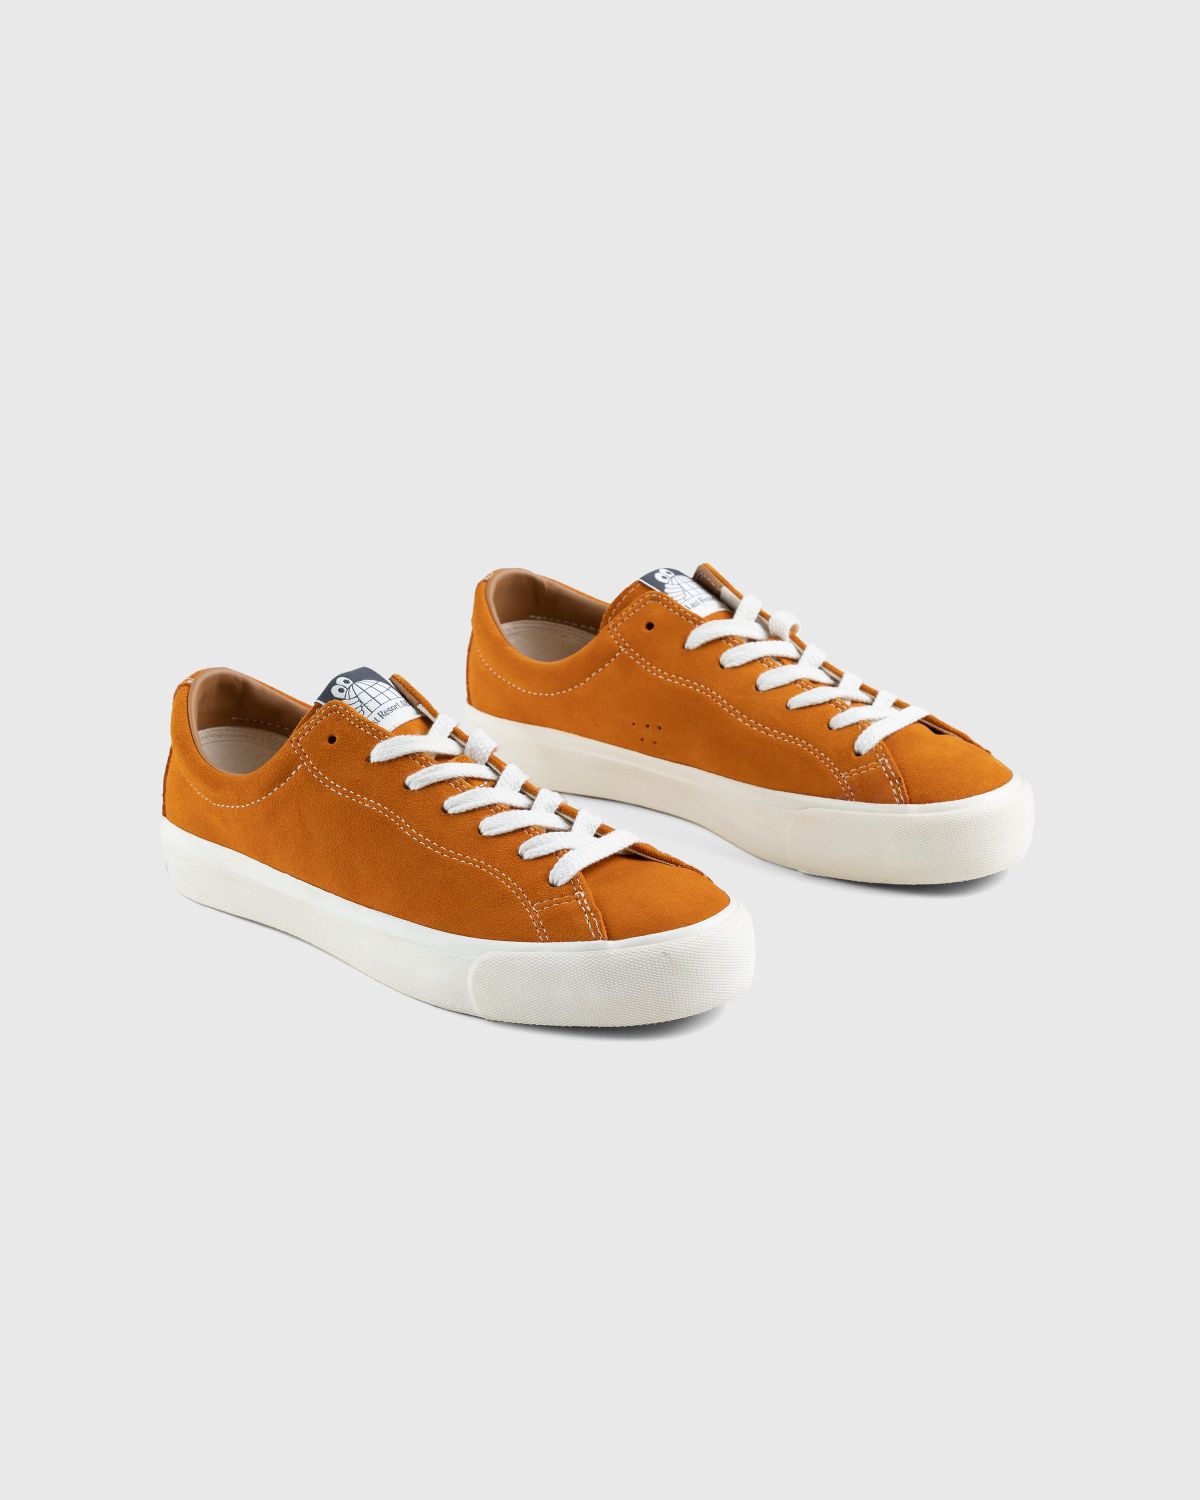 Last Resort AB – VM003 Suede Lo Cheddar/White - Low Top Sneakers - Orange - Image 4